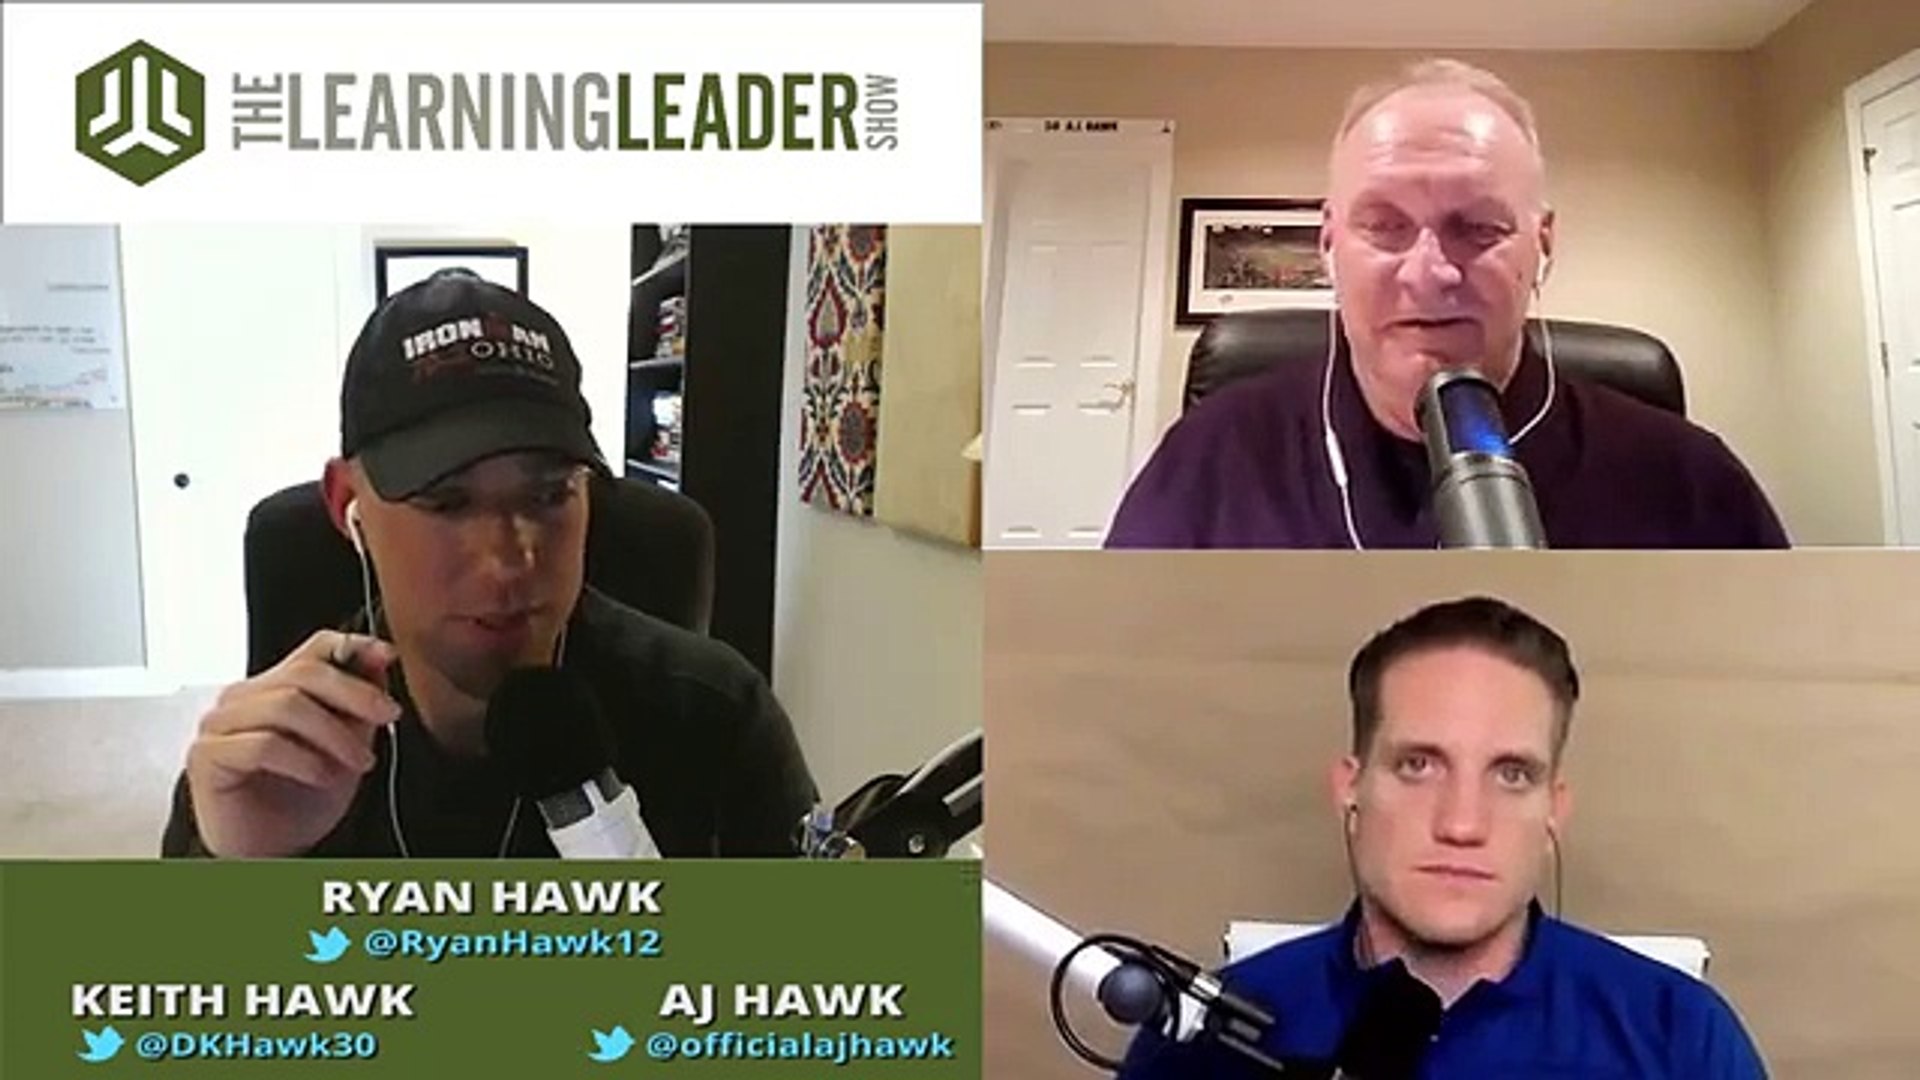 The Learning Leader Show With Ryan Hawk: Episode #200 AJ Hawk & Keith Hawk